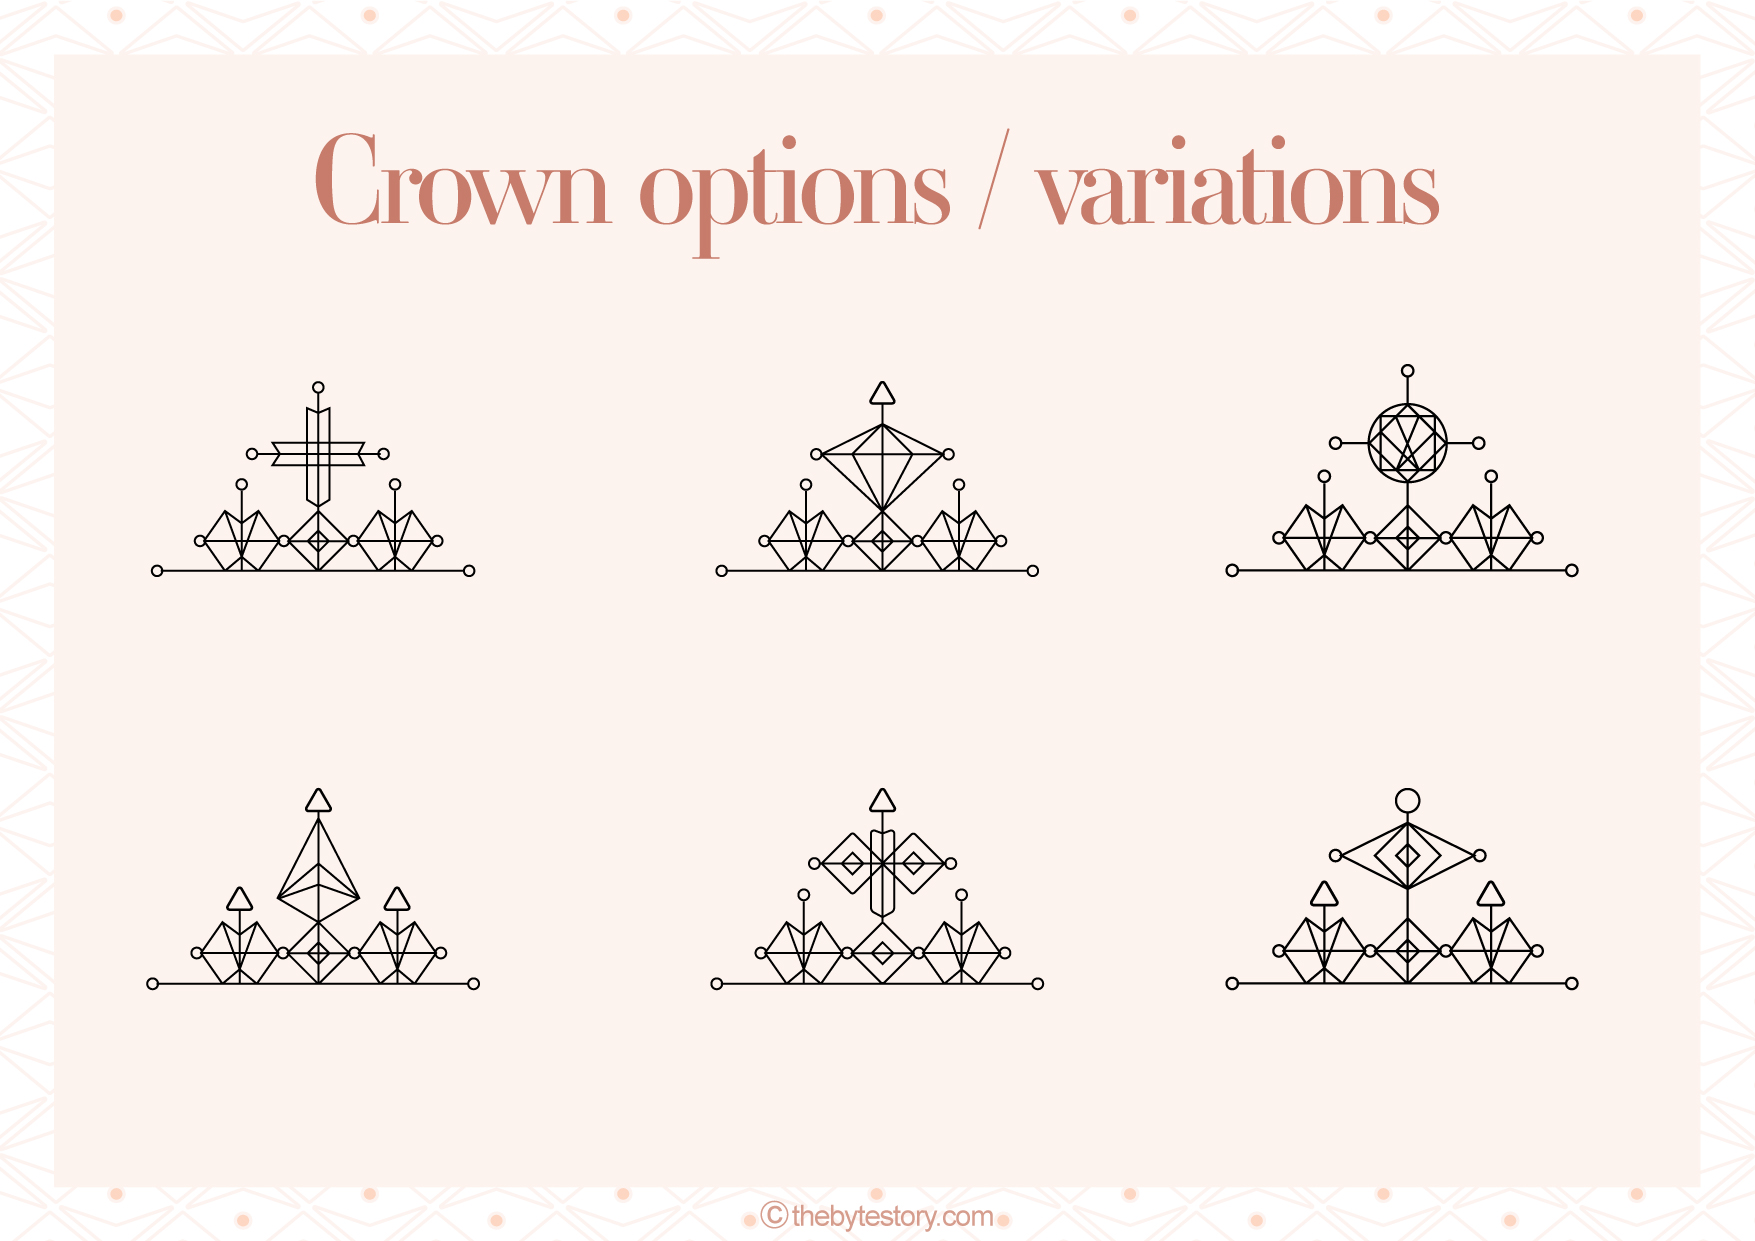 Crown options